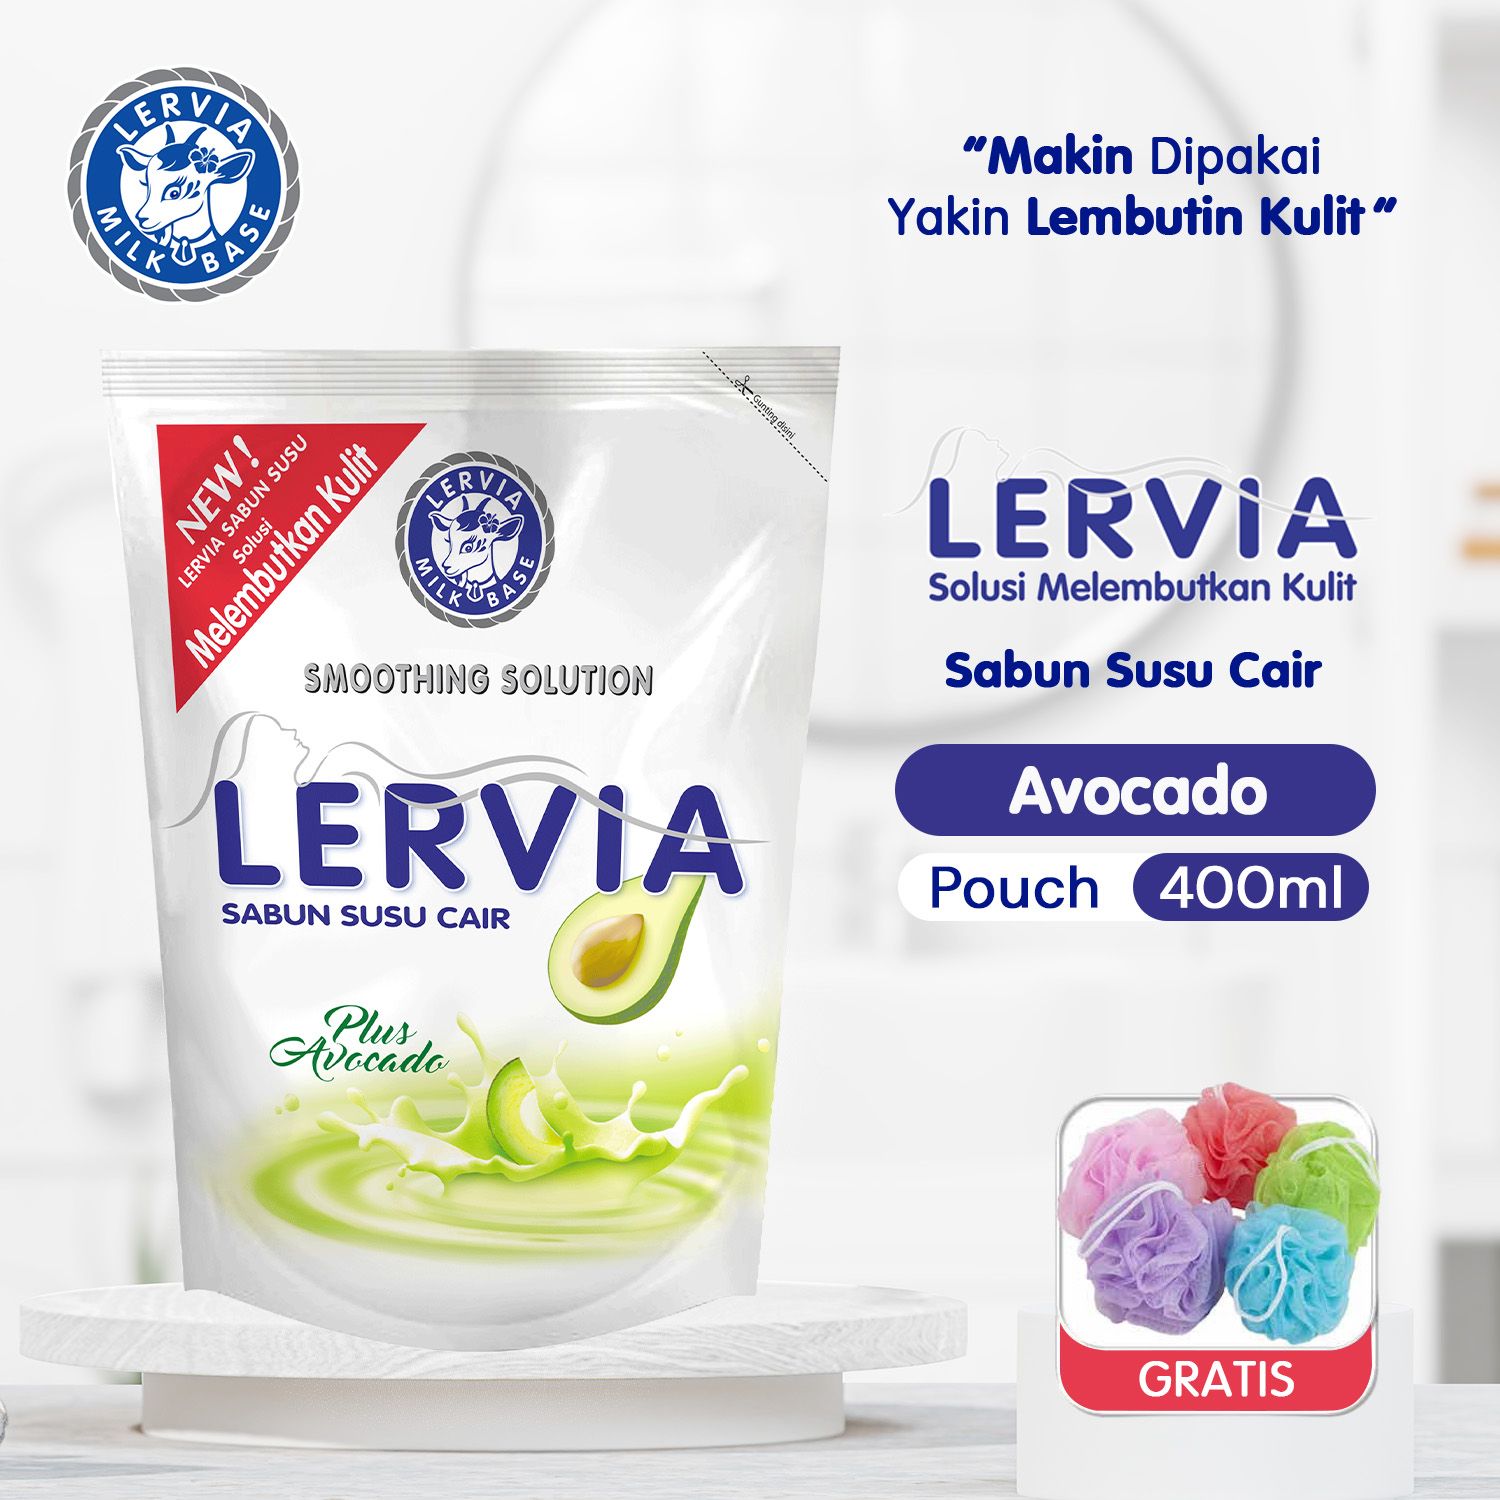 (Free Gift) LERVIA Sabun Susu Cair Plus Avocado 400mL Value Pack - 1